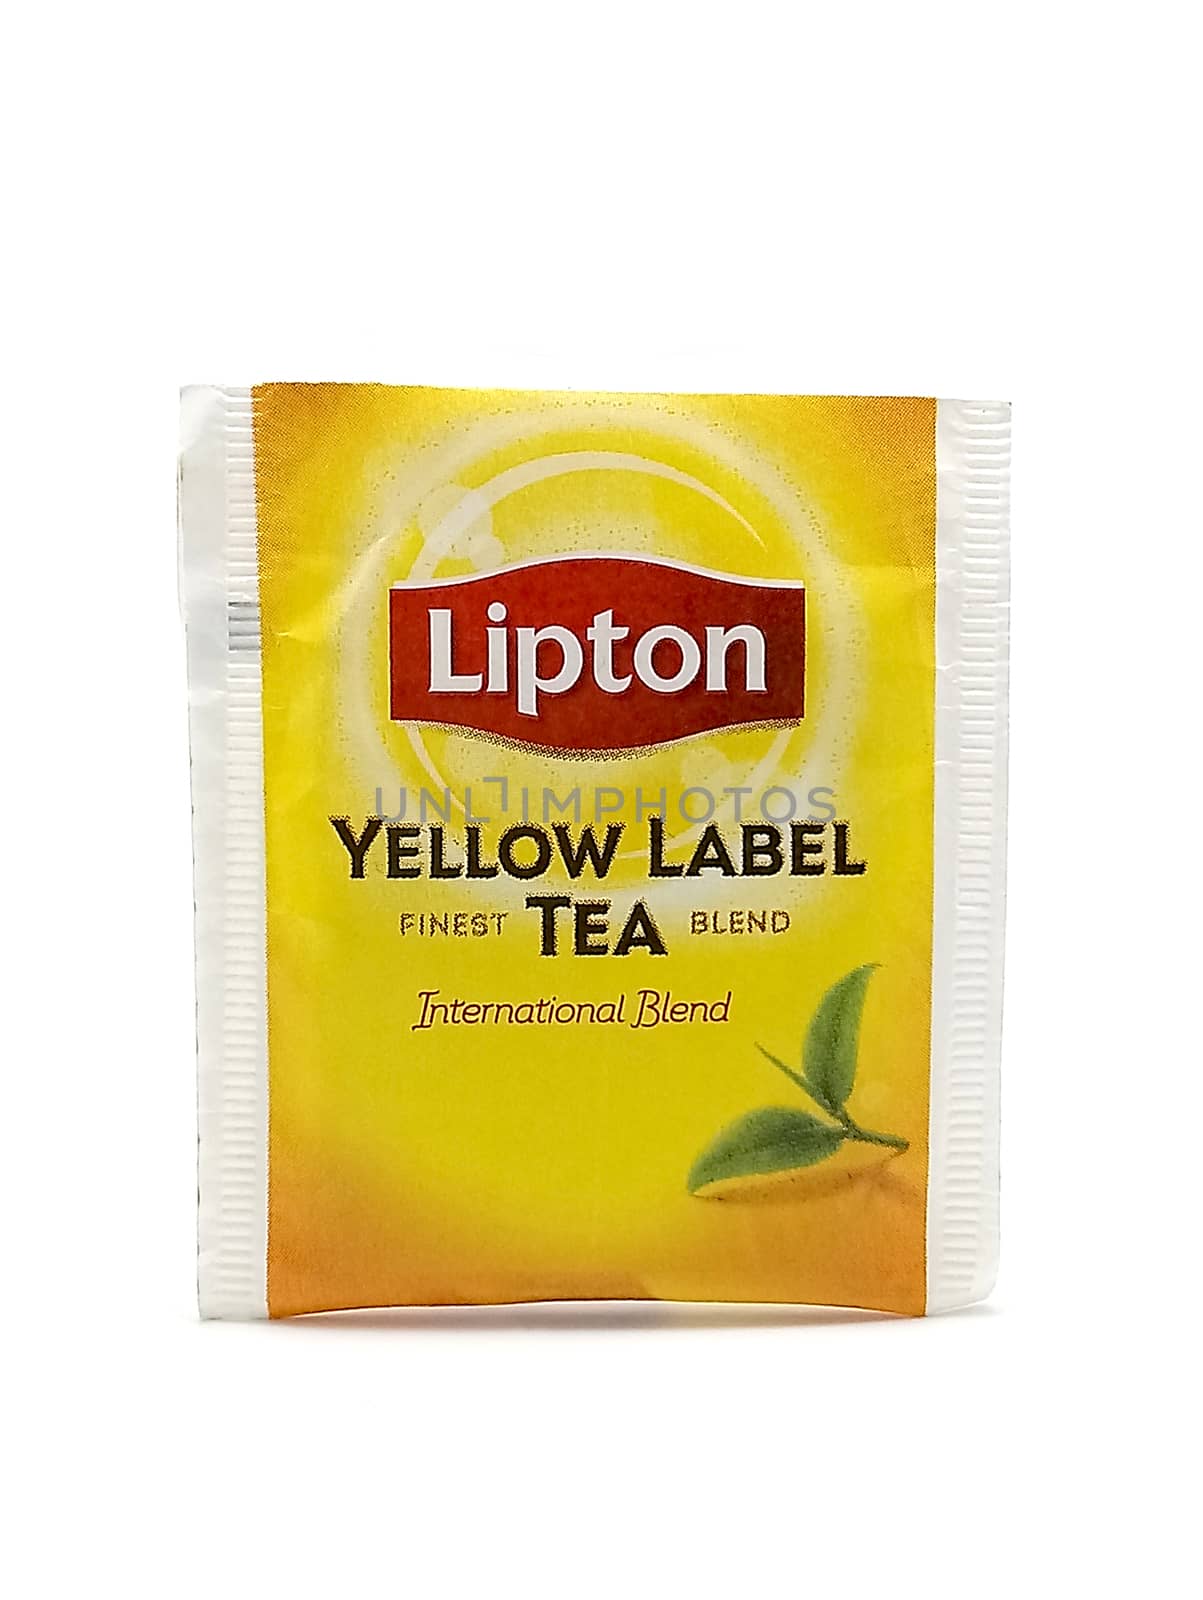 MANILA, PH - JUNE 23 - Lipton yellow label tea on June 23, 2020 in Manila, Philippines.